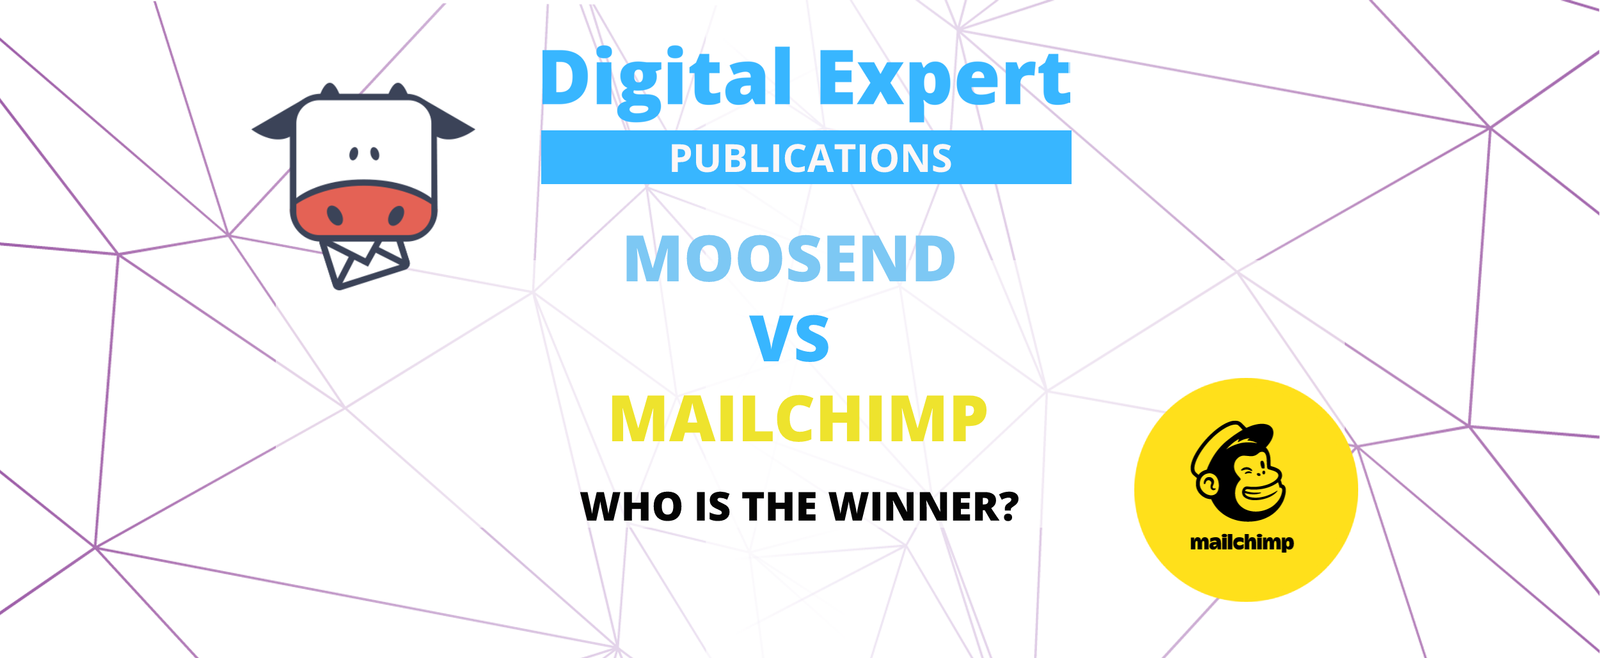 Moosend vs Mailchimp. Who is the winner? Service comparison - Digital Expert